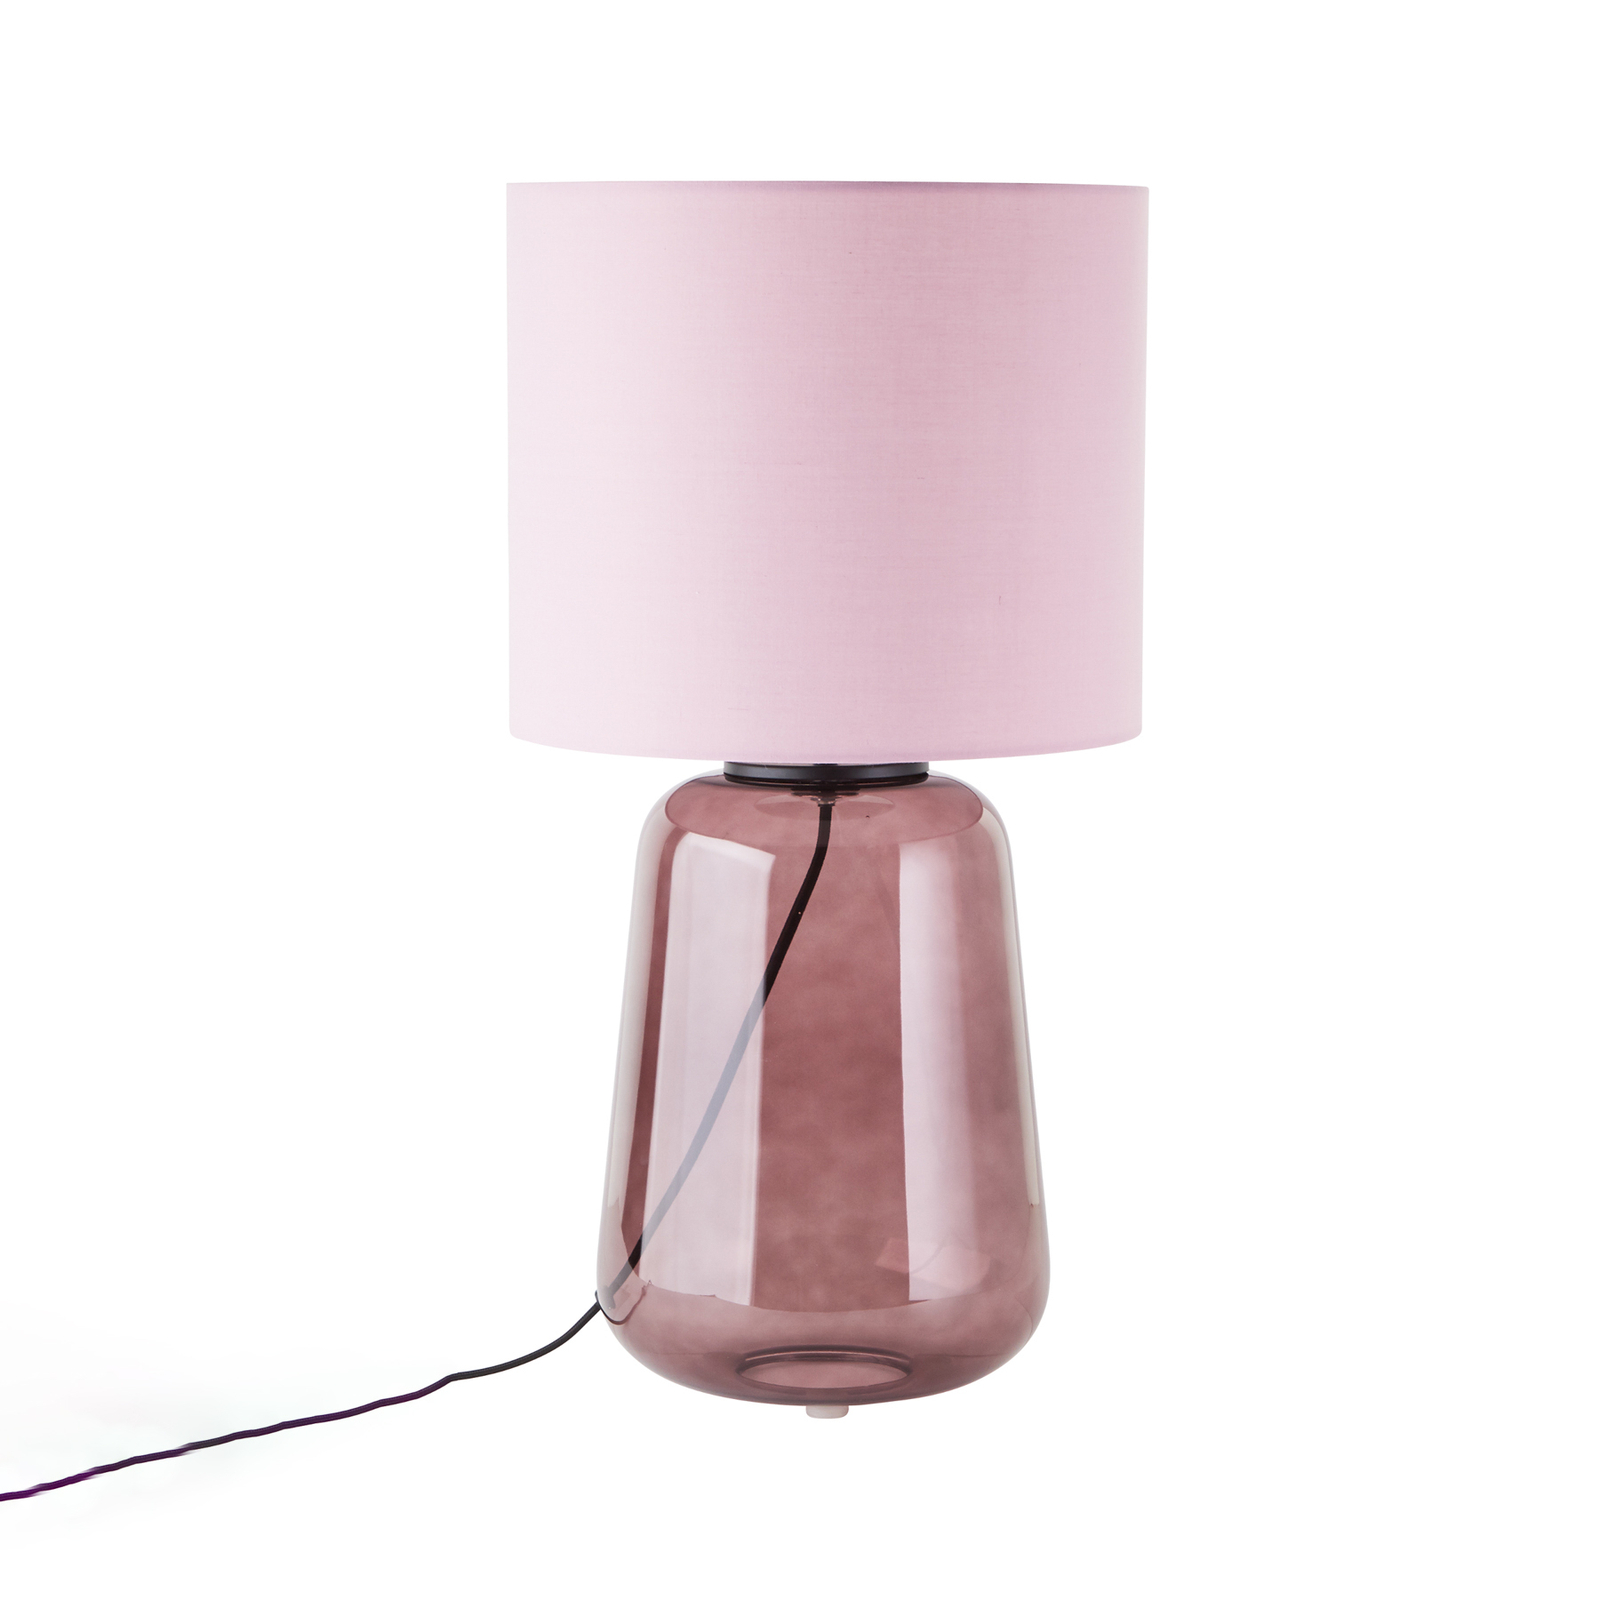 Hydra table lamp, 56.5 cm high, mauve/violet